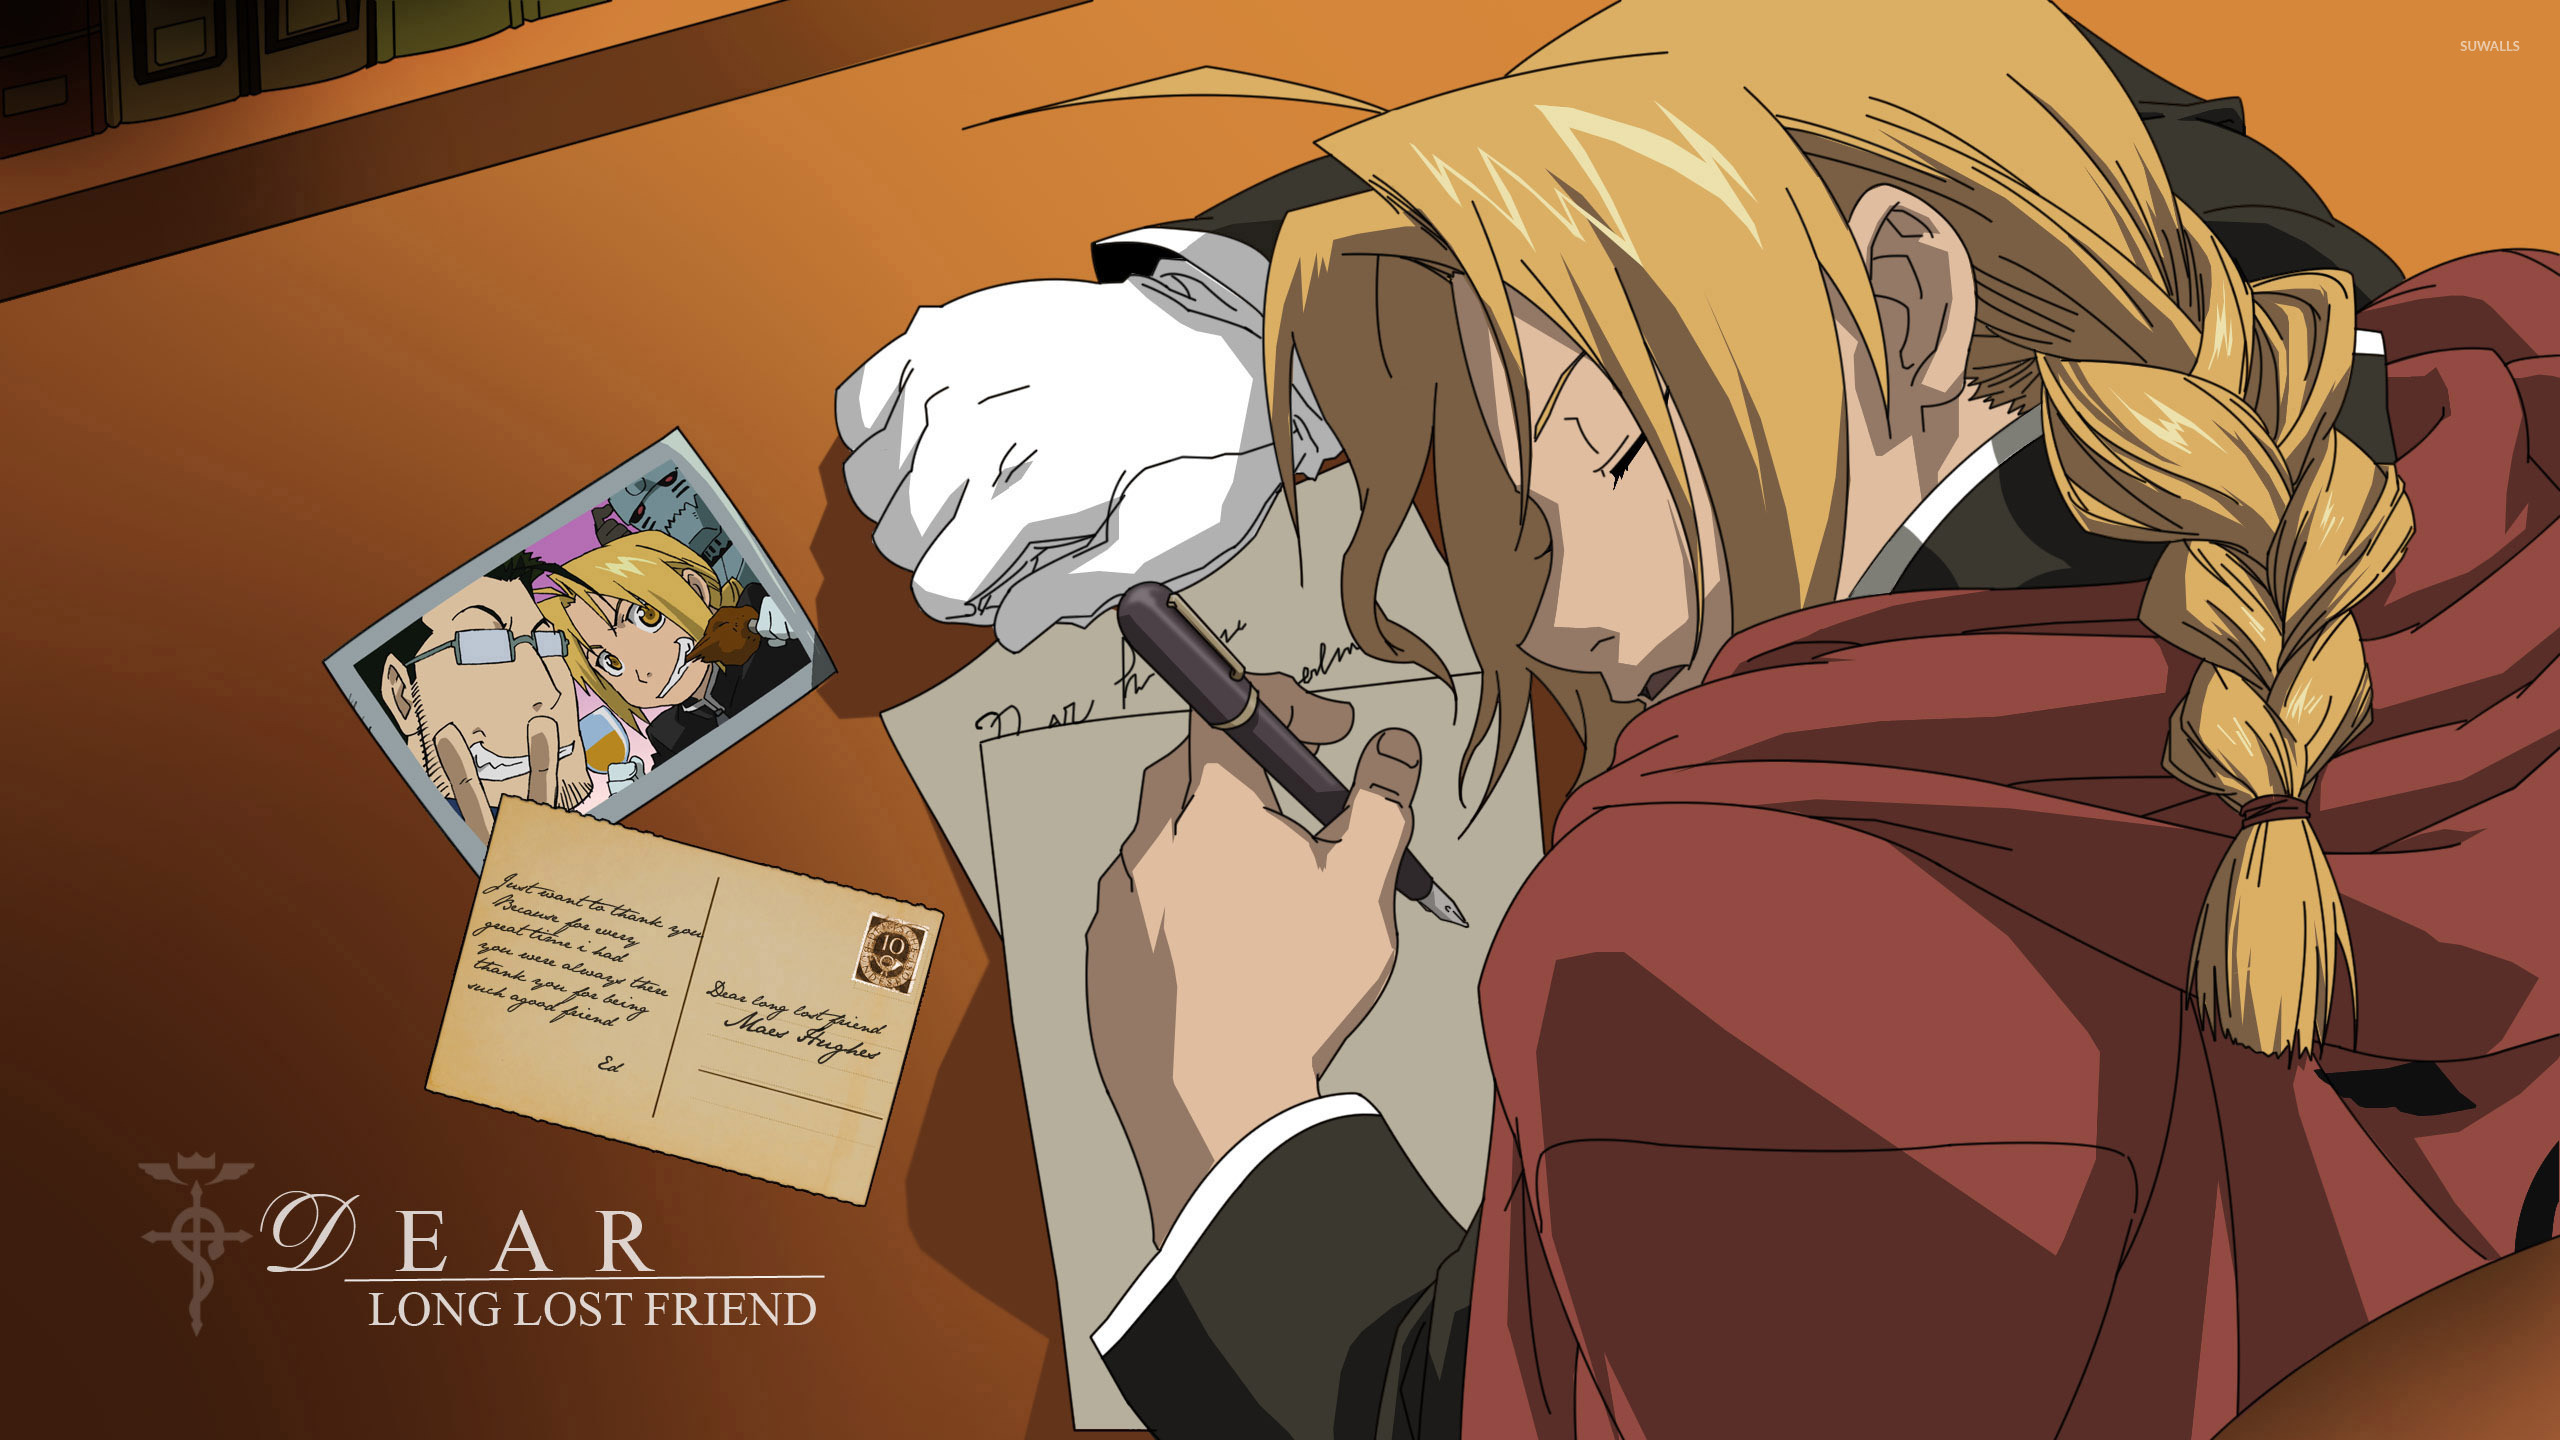 Edward Elric - Fullmetal Alchemist [4] wallpaper - Anime wallpapers - #32619